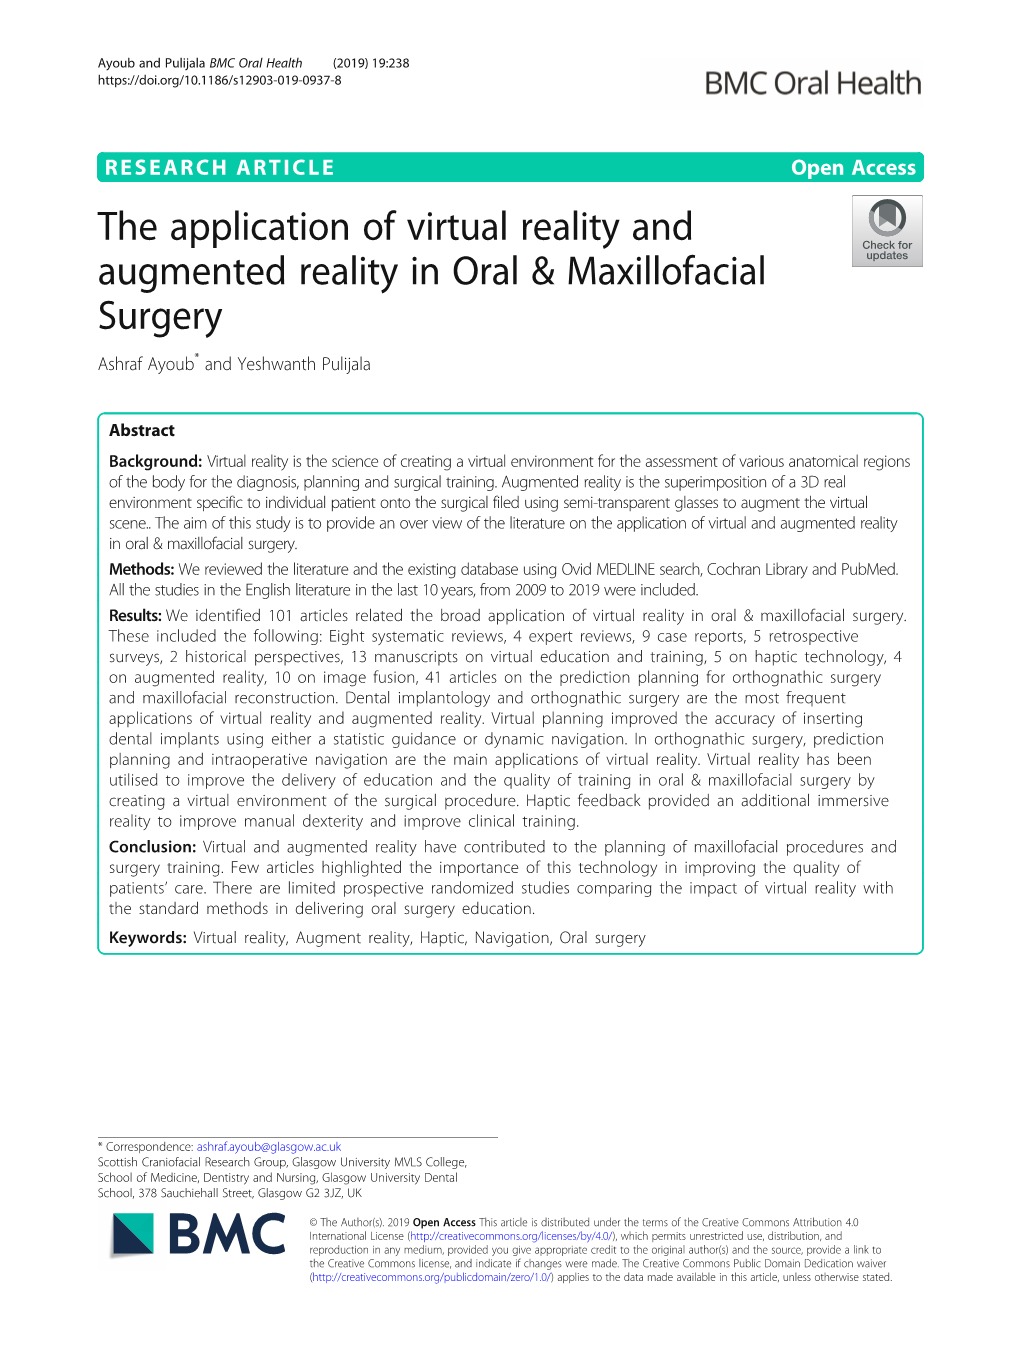 The Application of Virtual Reality and Augmented Reality in Oral & Maxillofacial Surgery Ashraf Ayoub* and Yeshwanth Pulijala